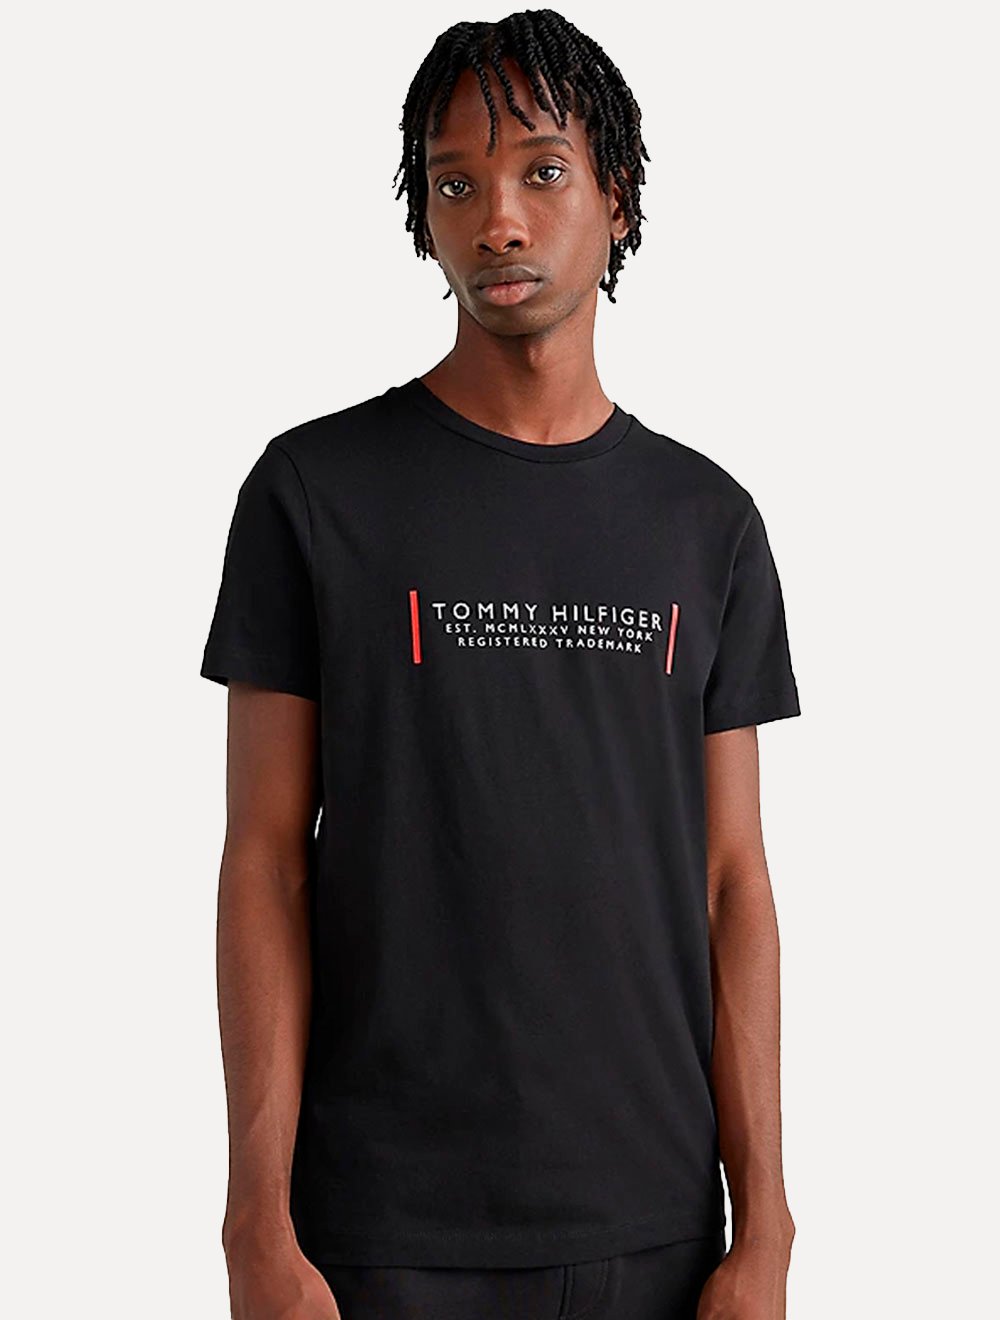 Camiseta Tommy Hilfiger Masculina Text Bar Corp Preta